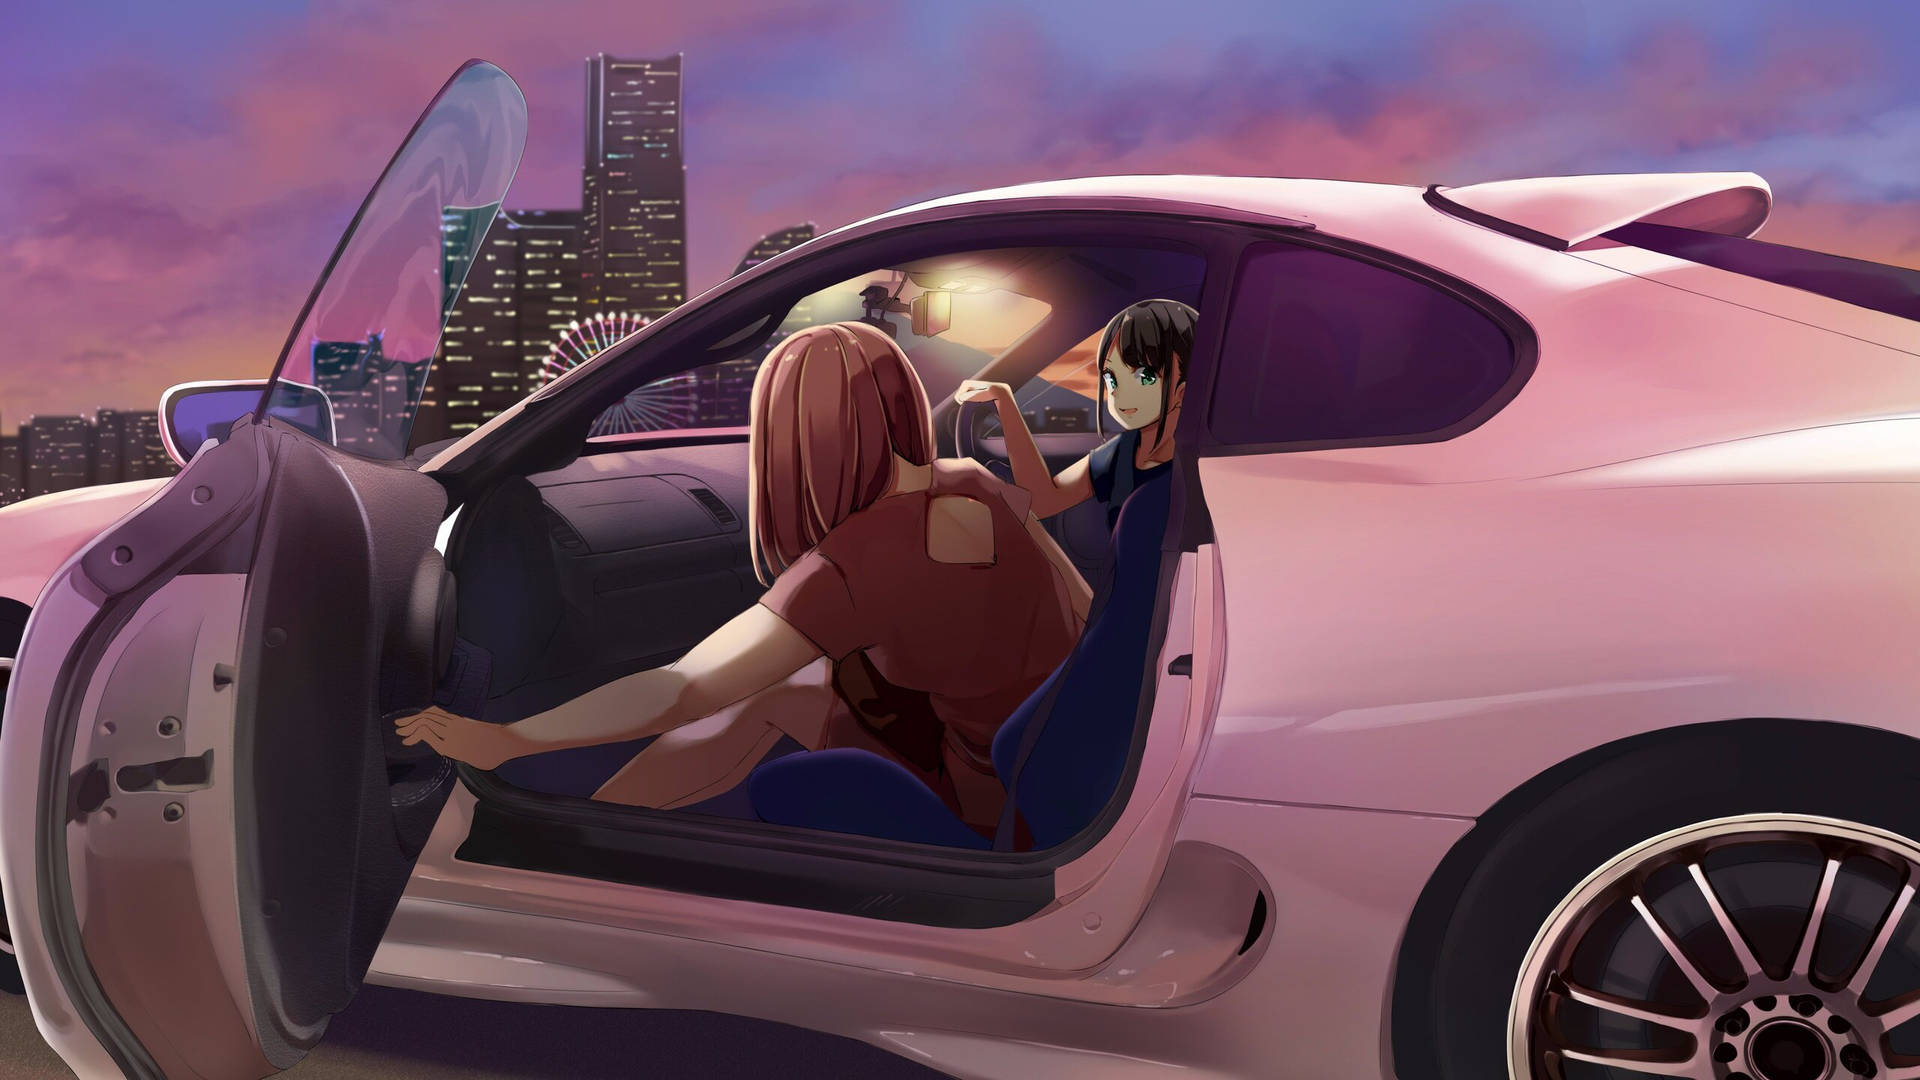 Girls Inside Toyota Supra Car Anime Background